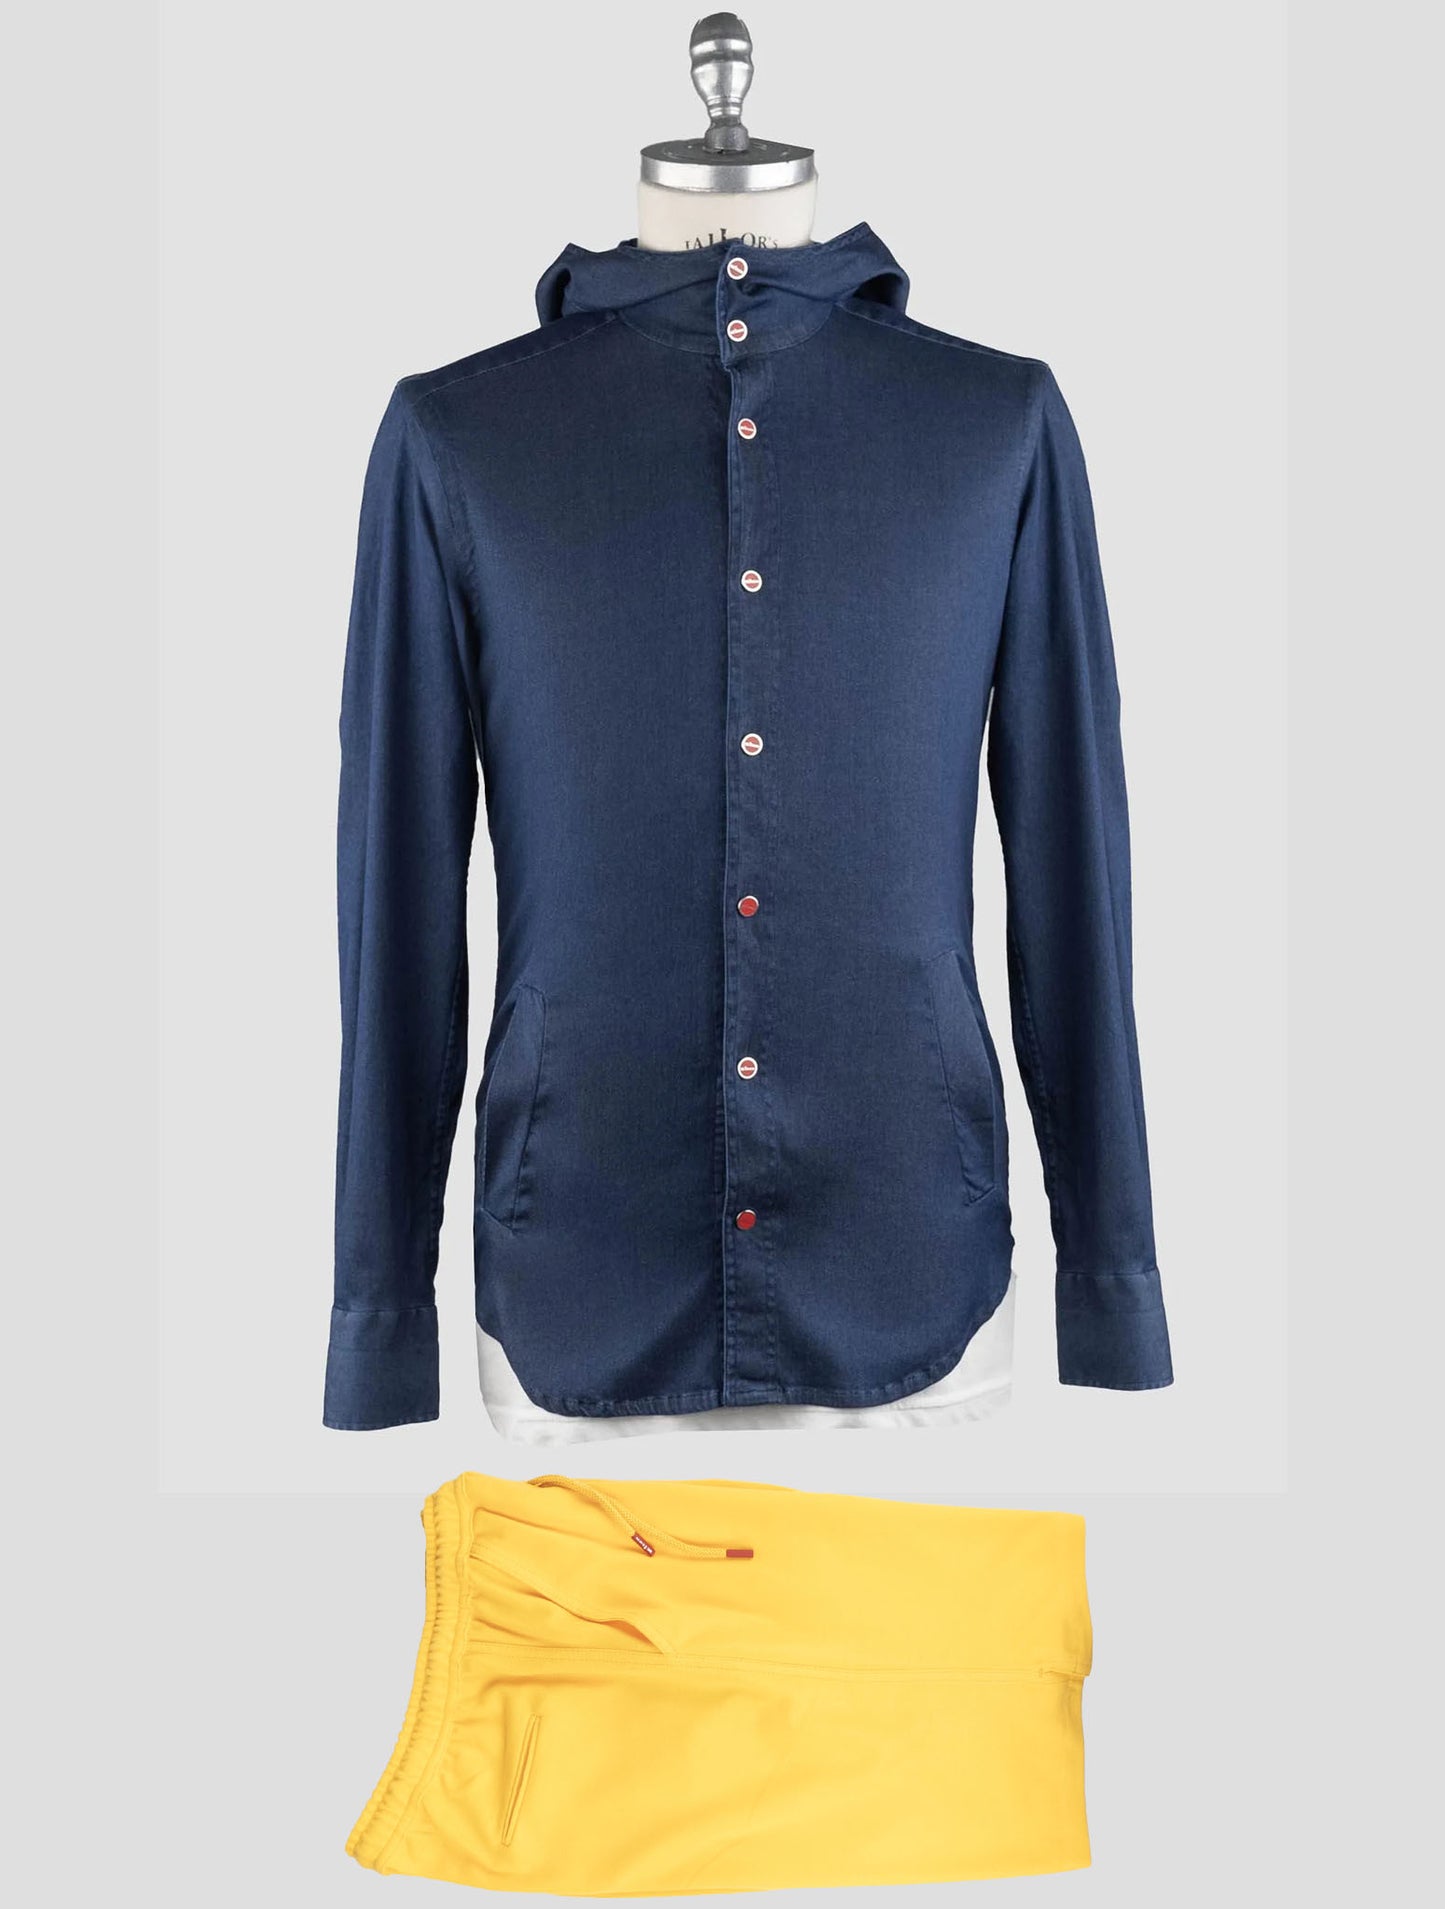 Kiton Matching Outfit-Blaue Mariano und gelbe kurze Hosen Trainings anzug